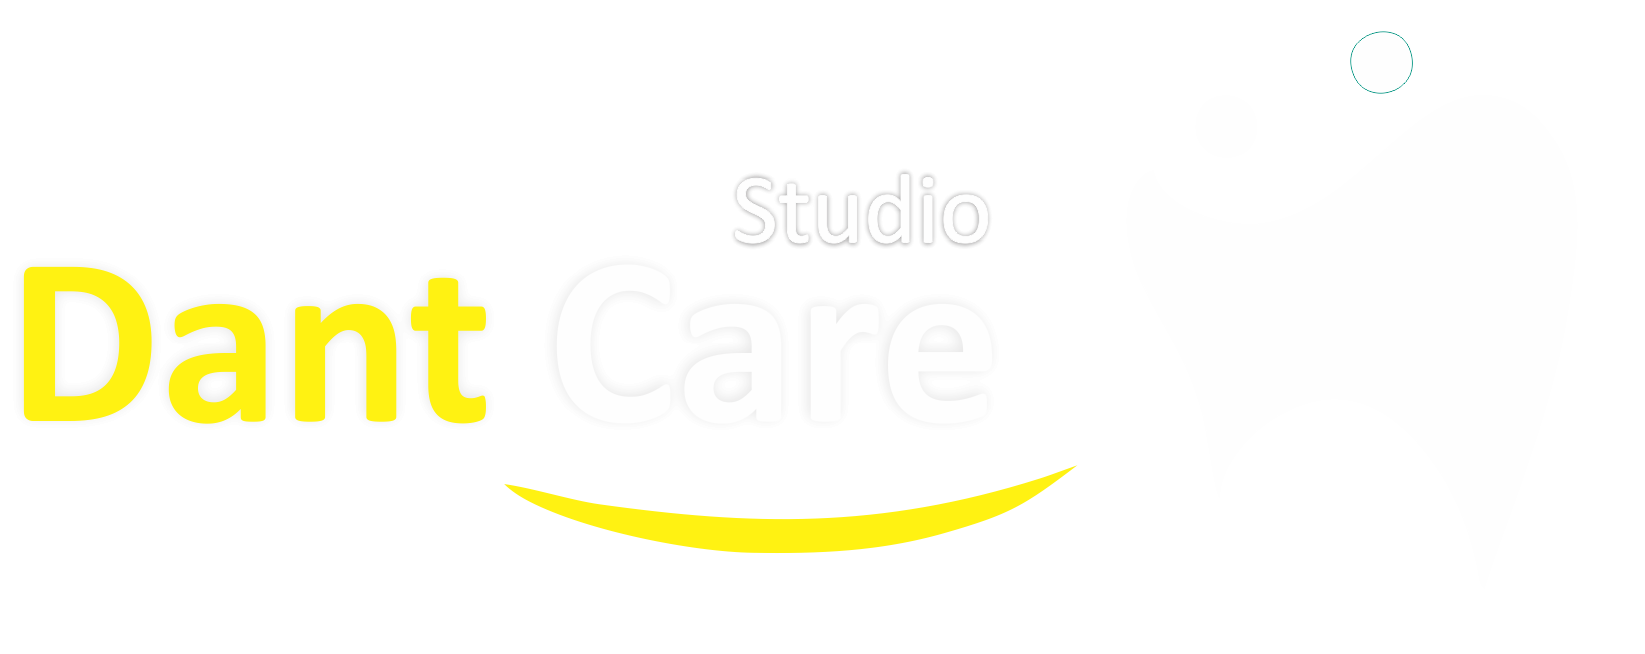 Dant Care Studio